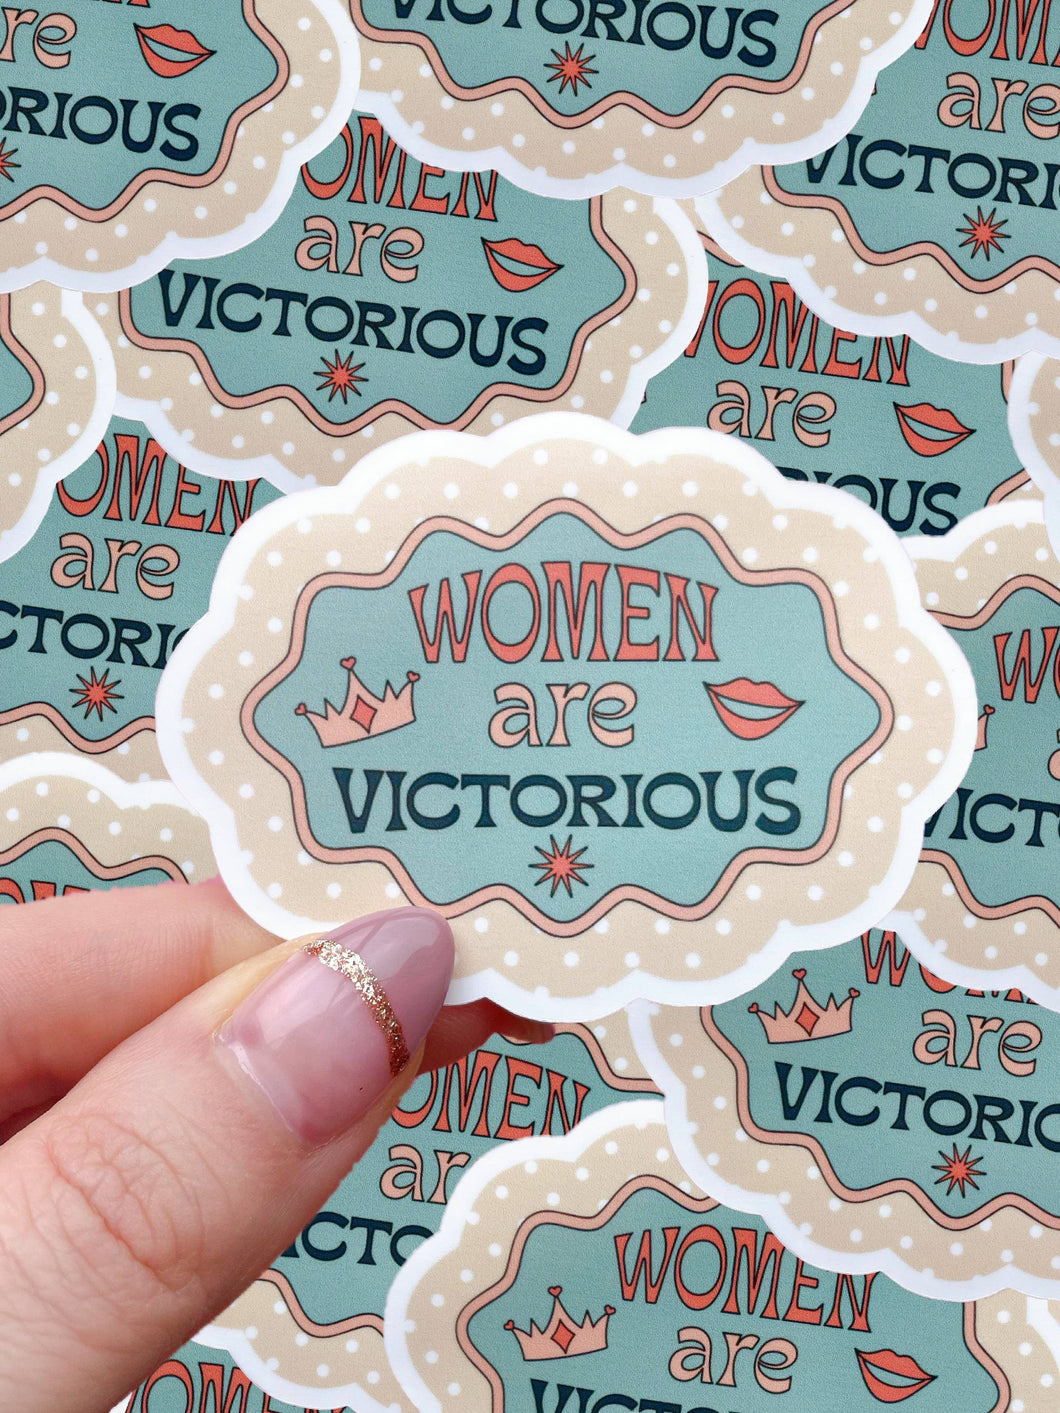 Women are victorious waterproof sticker